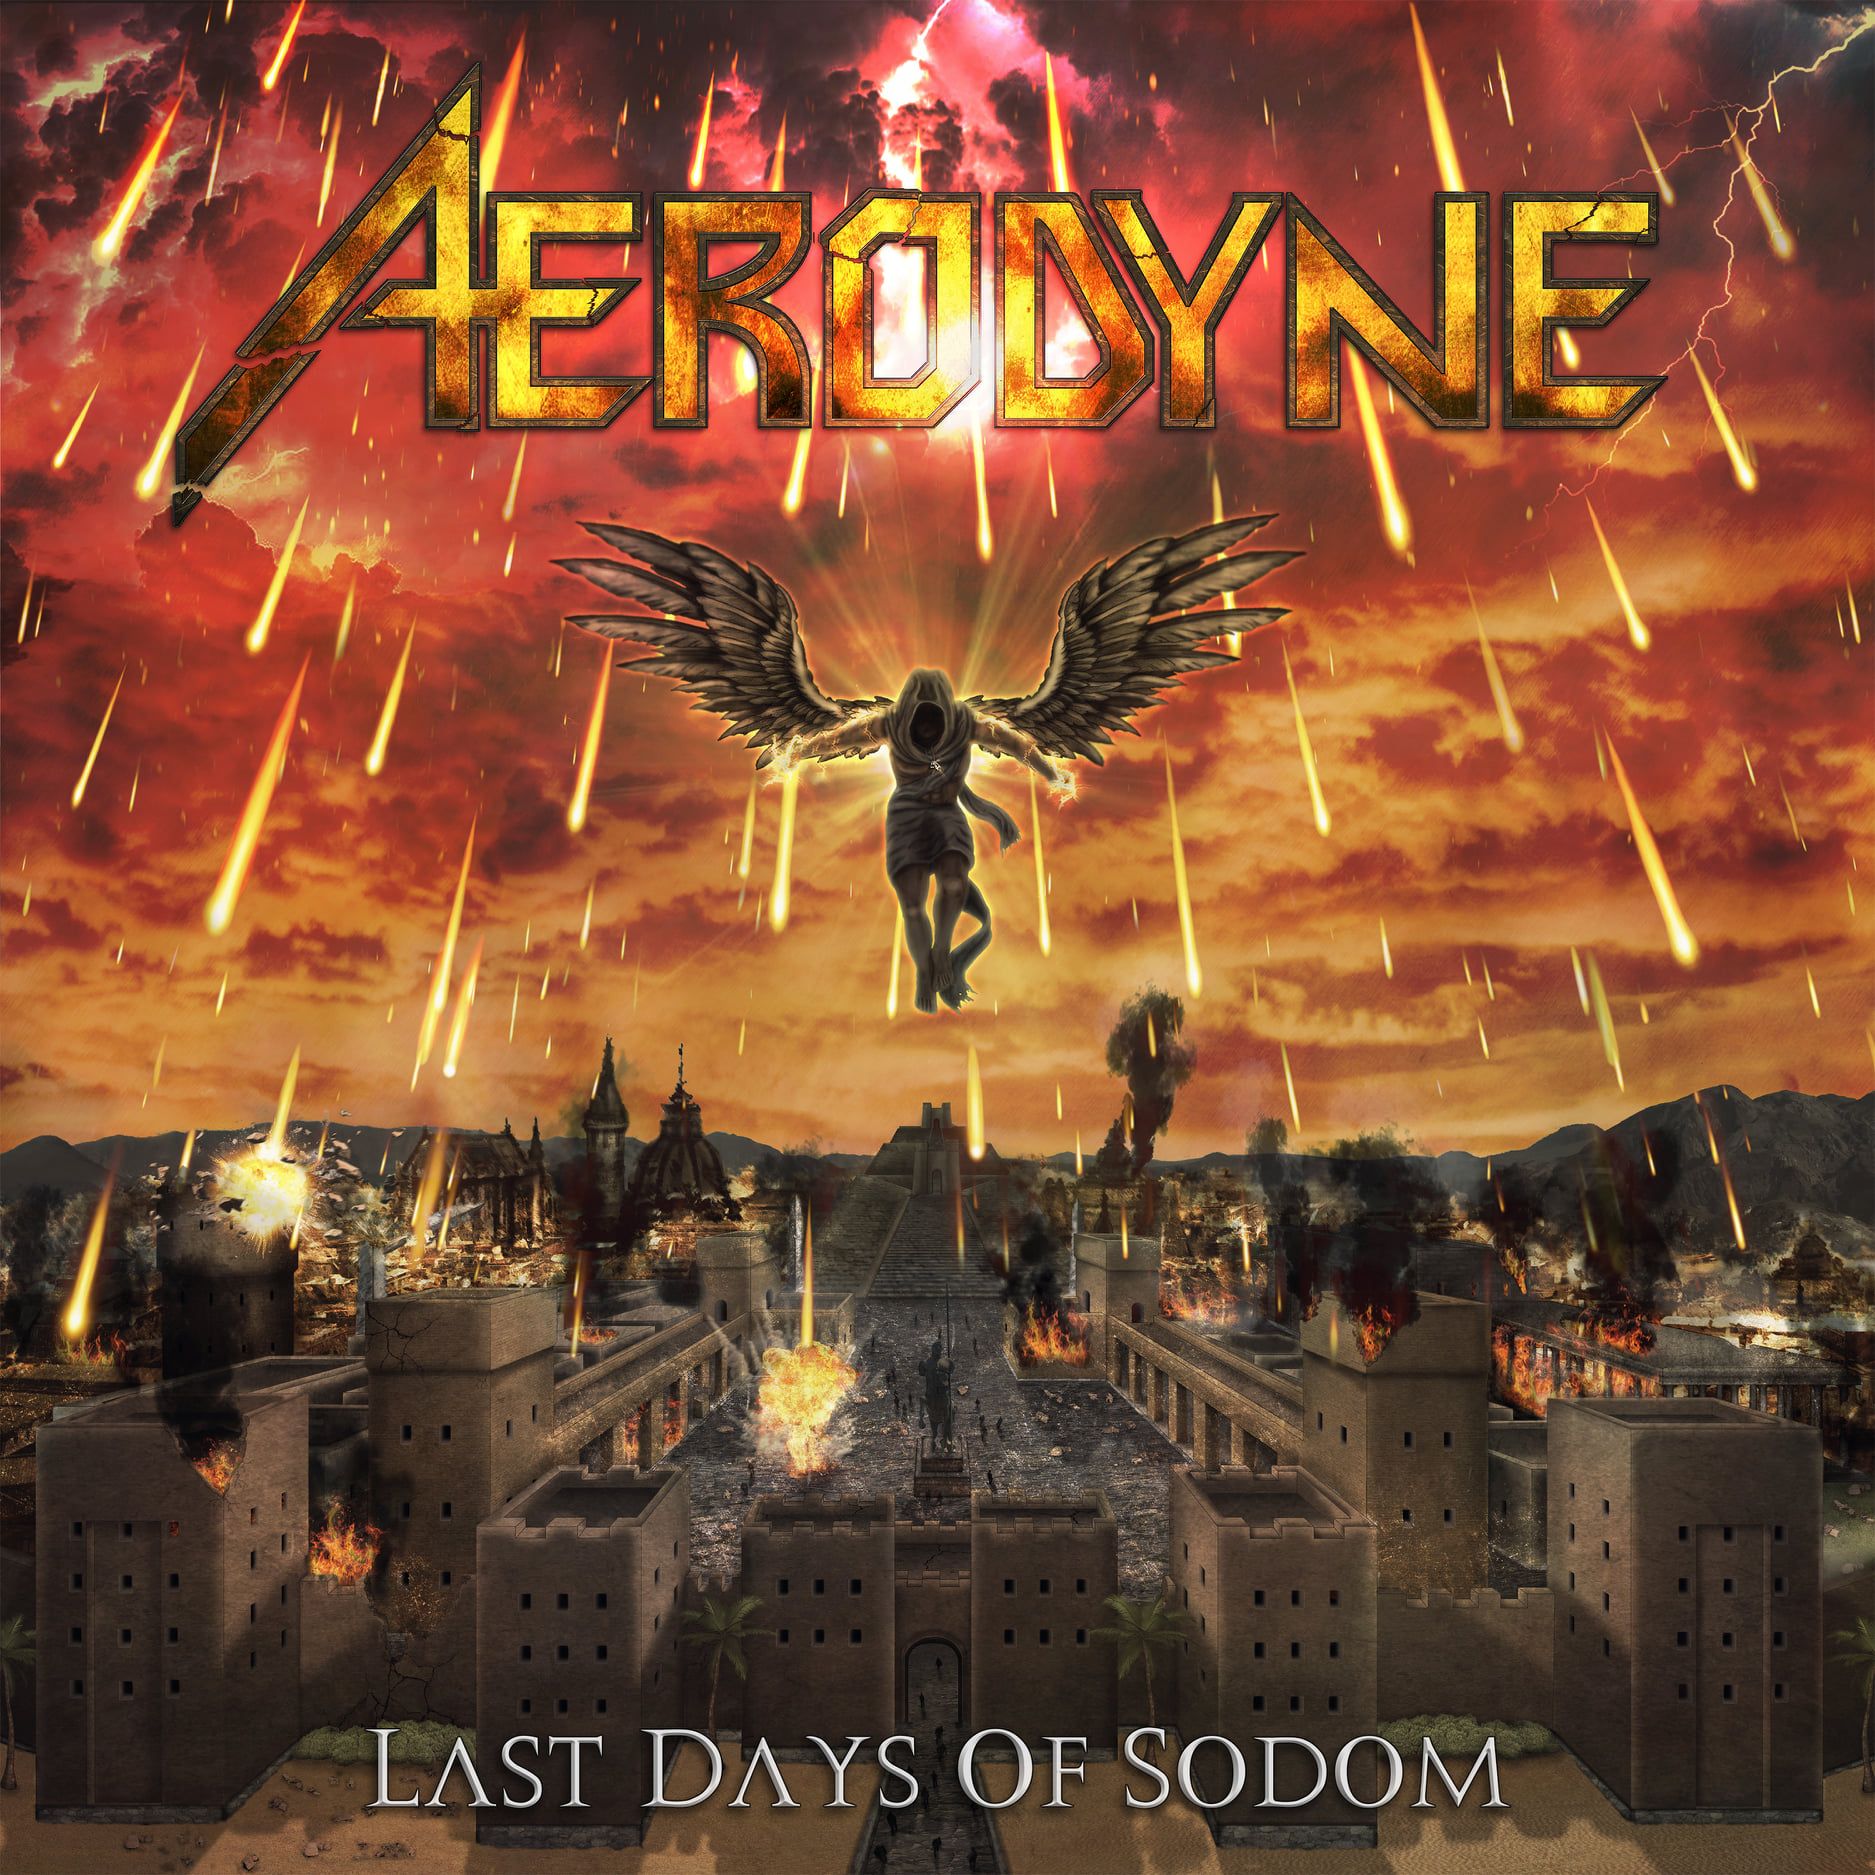 Aerodyne (Heavy Metal)